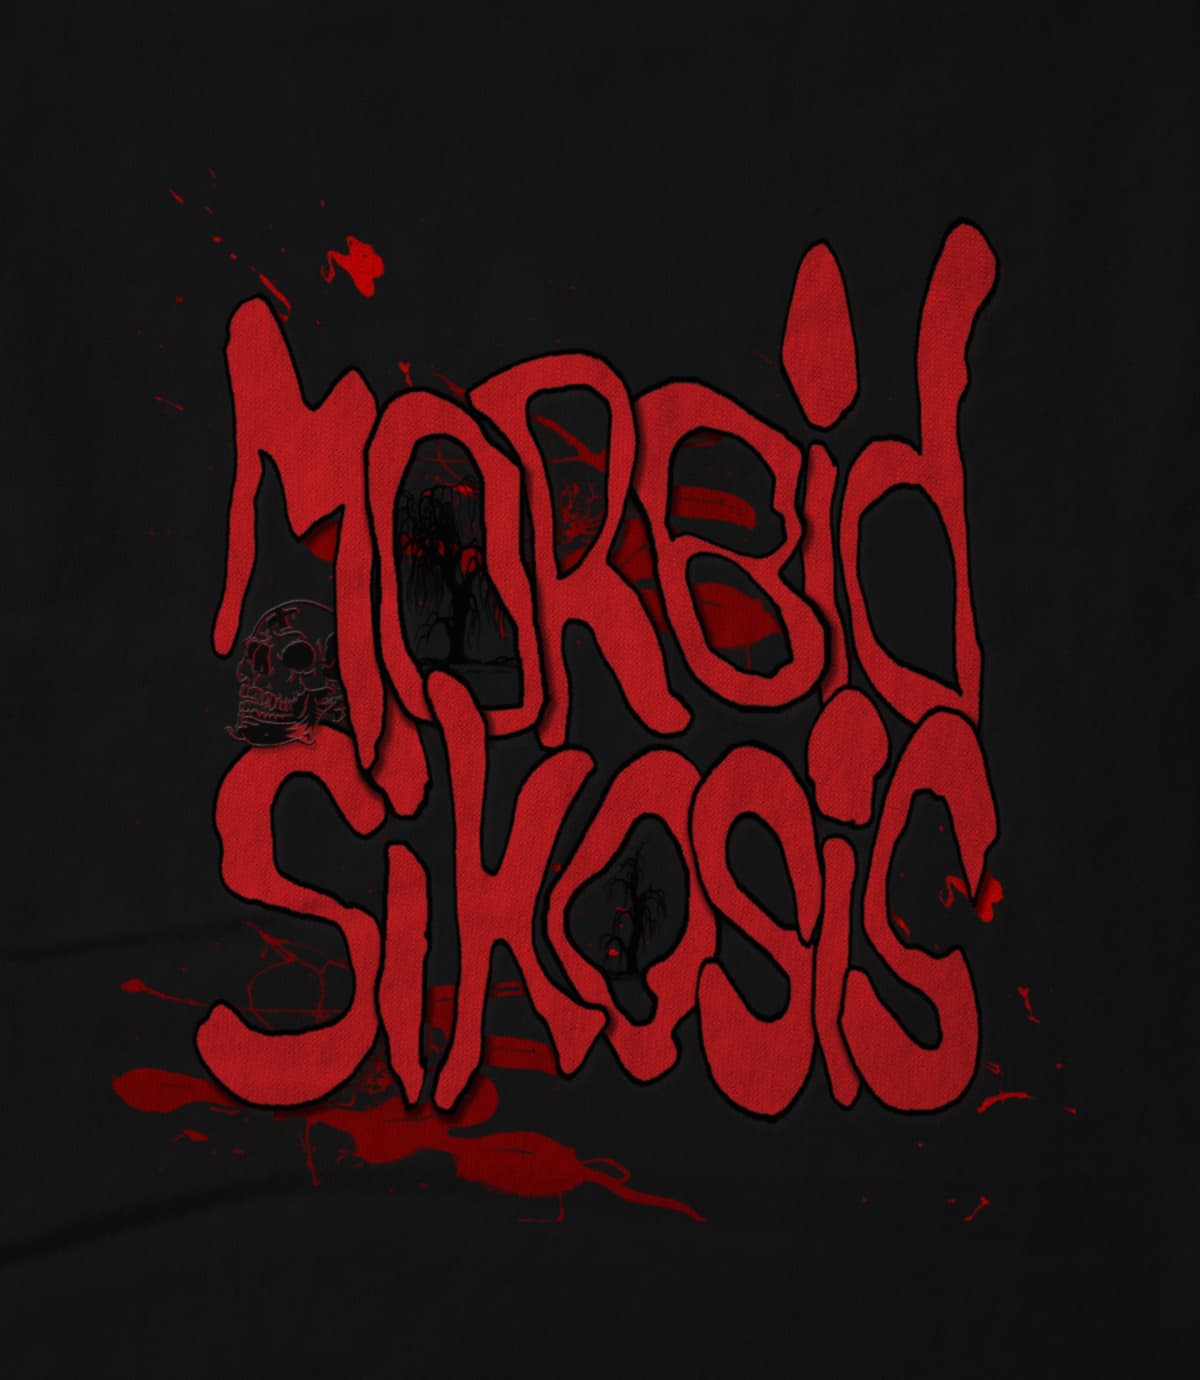 Morbid sikosis morbid  black  1595800572